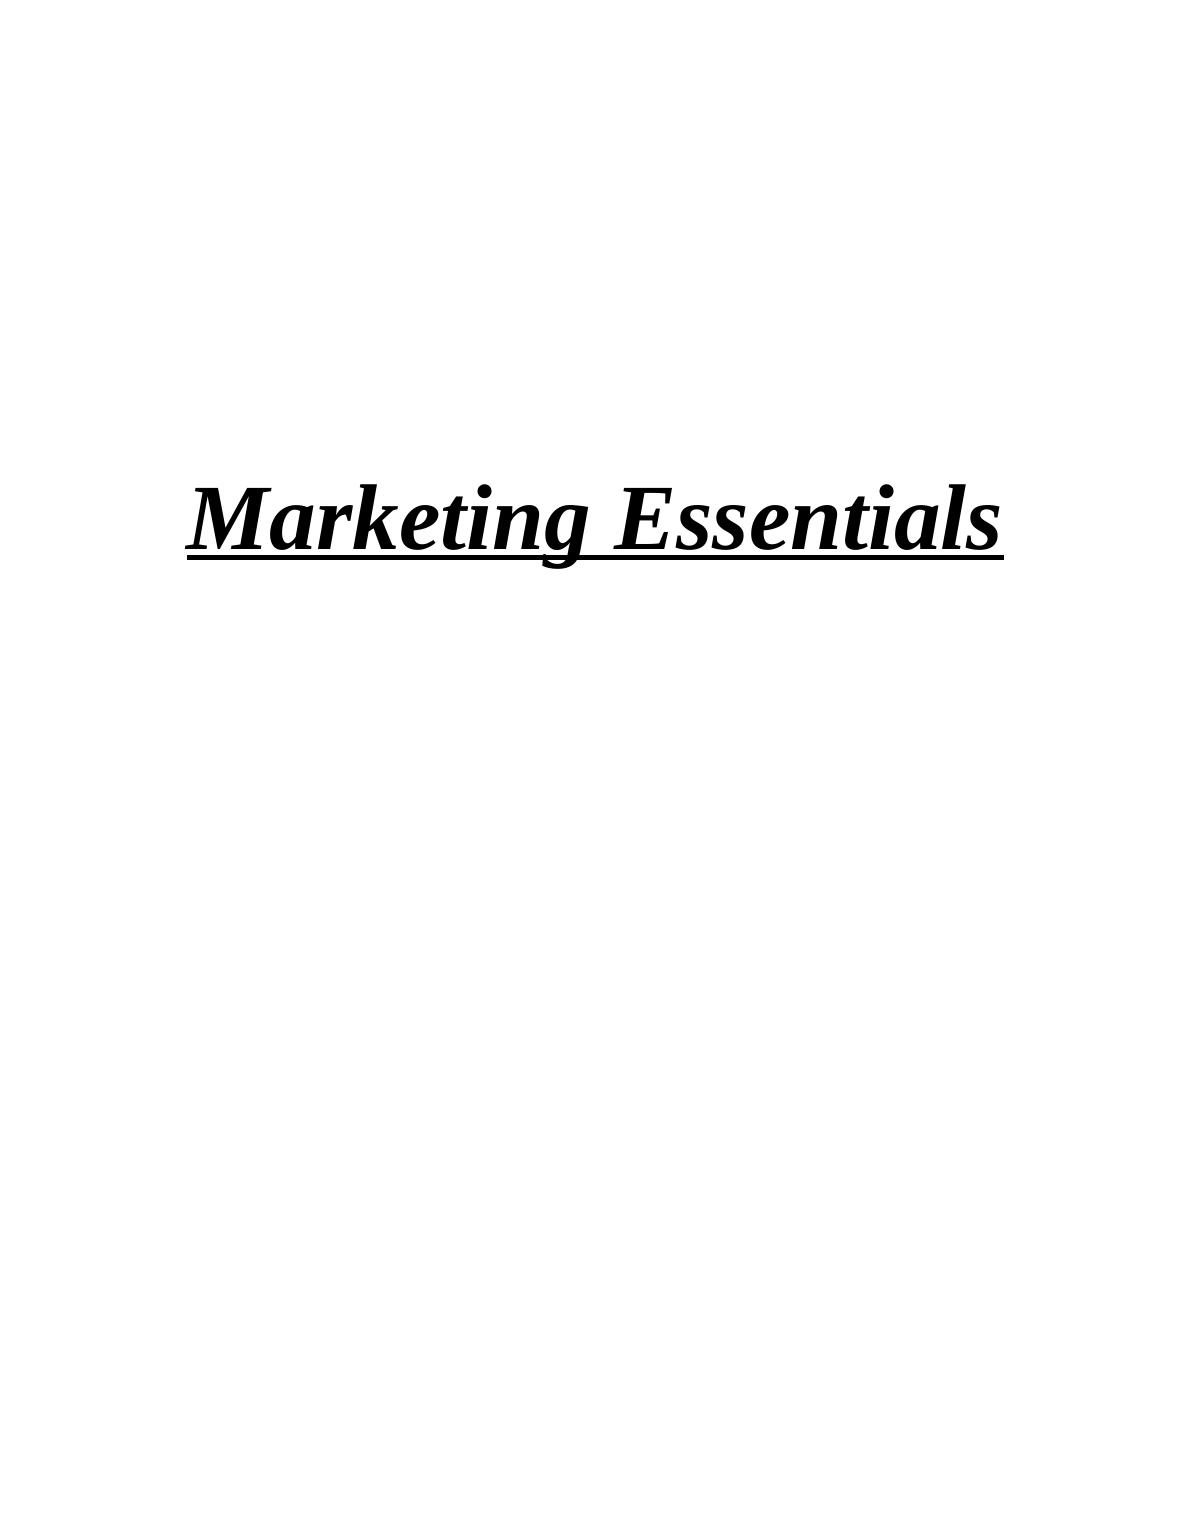 Marketing Essentials - Hilton hotel  Assignment_1